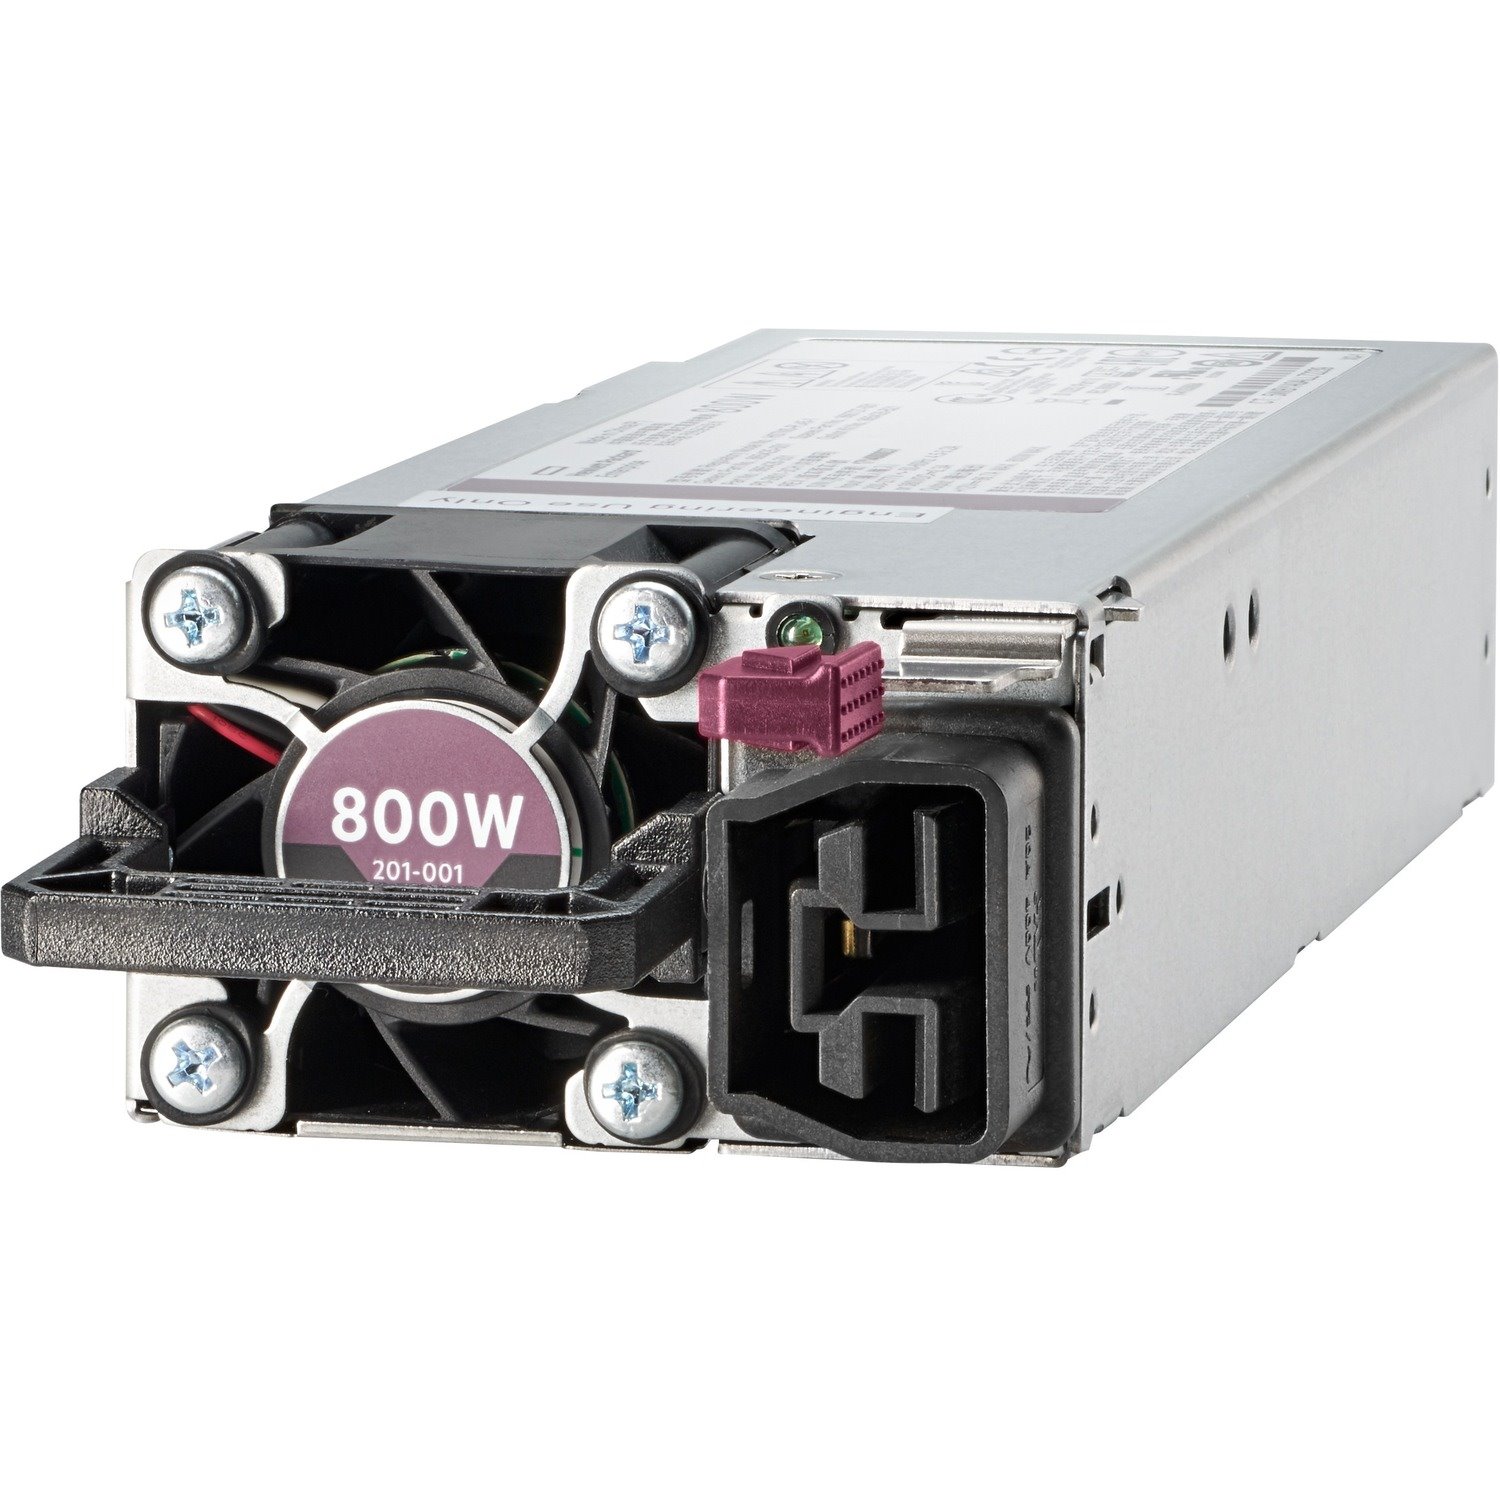 HPE 800W Flex Slot Universal Hot Plug Low Halogen Power Supply Kit